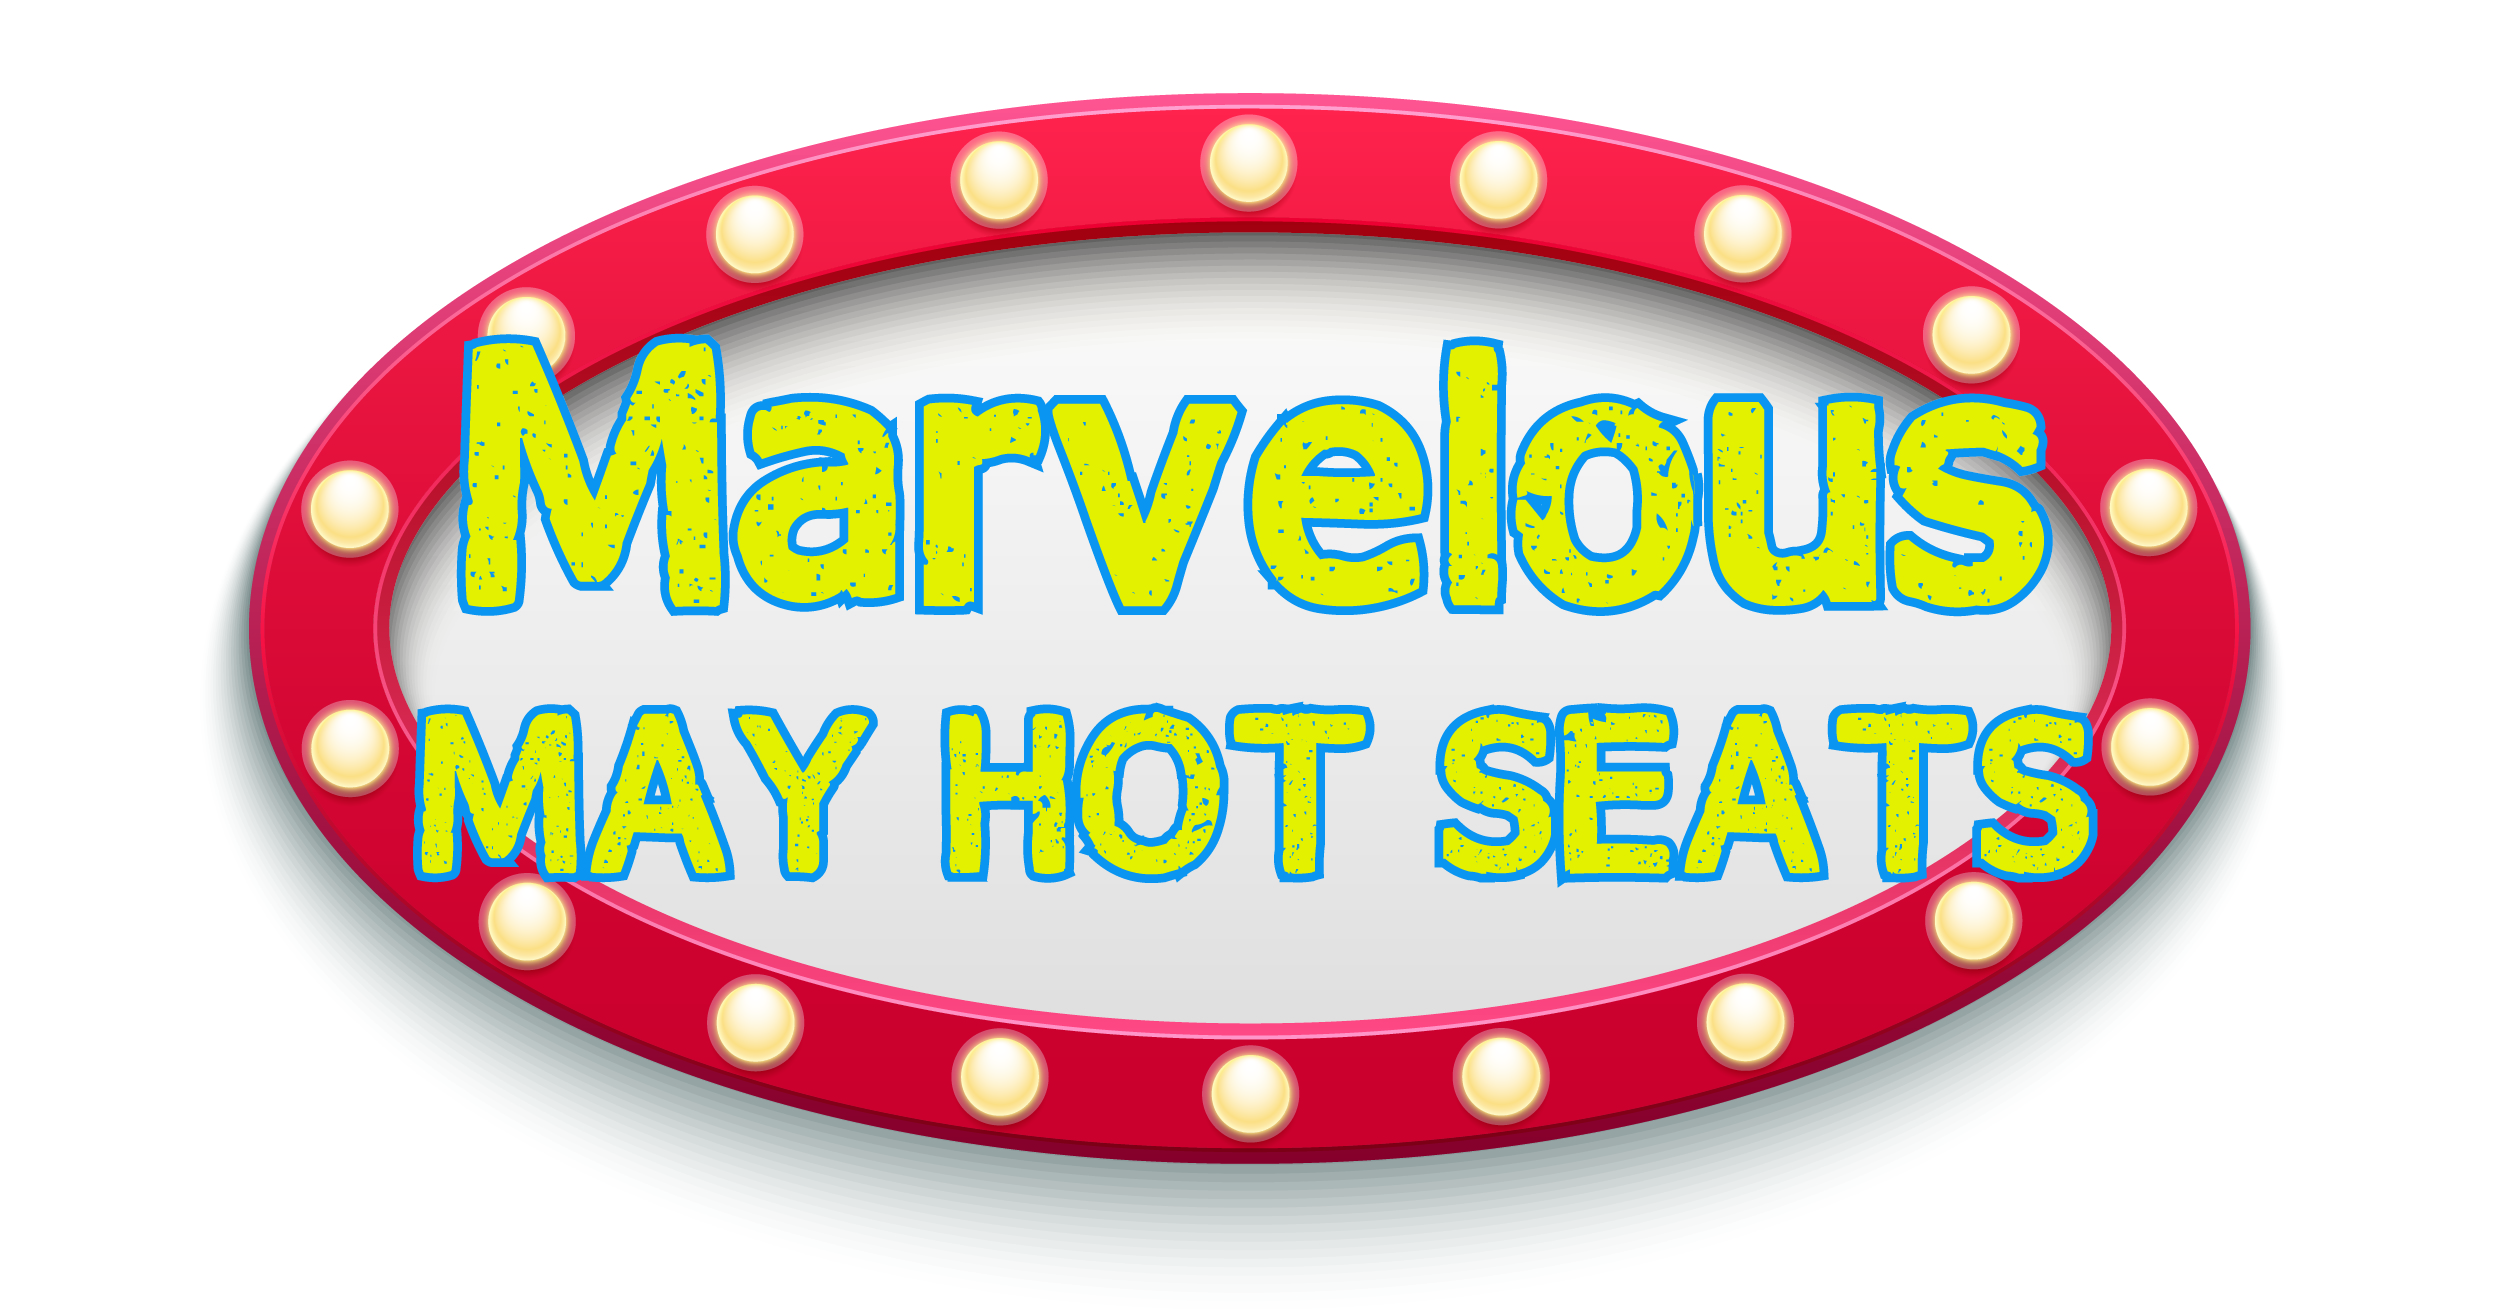 MARVELOUS MAY HOT SEATS